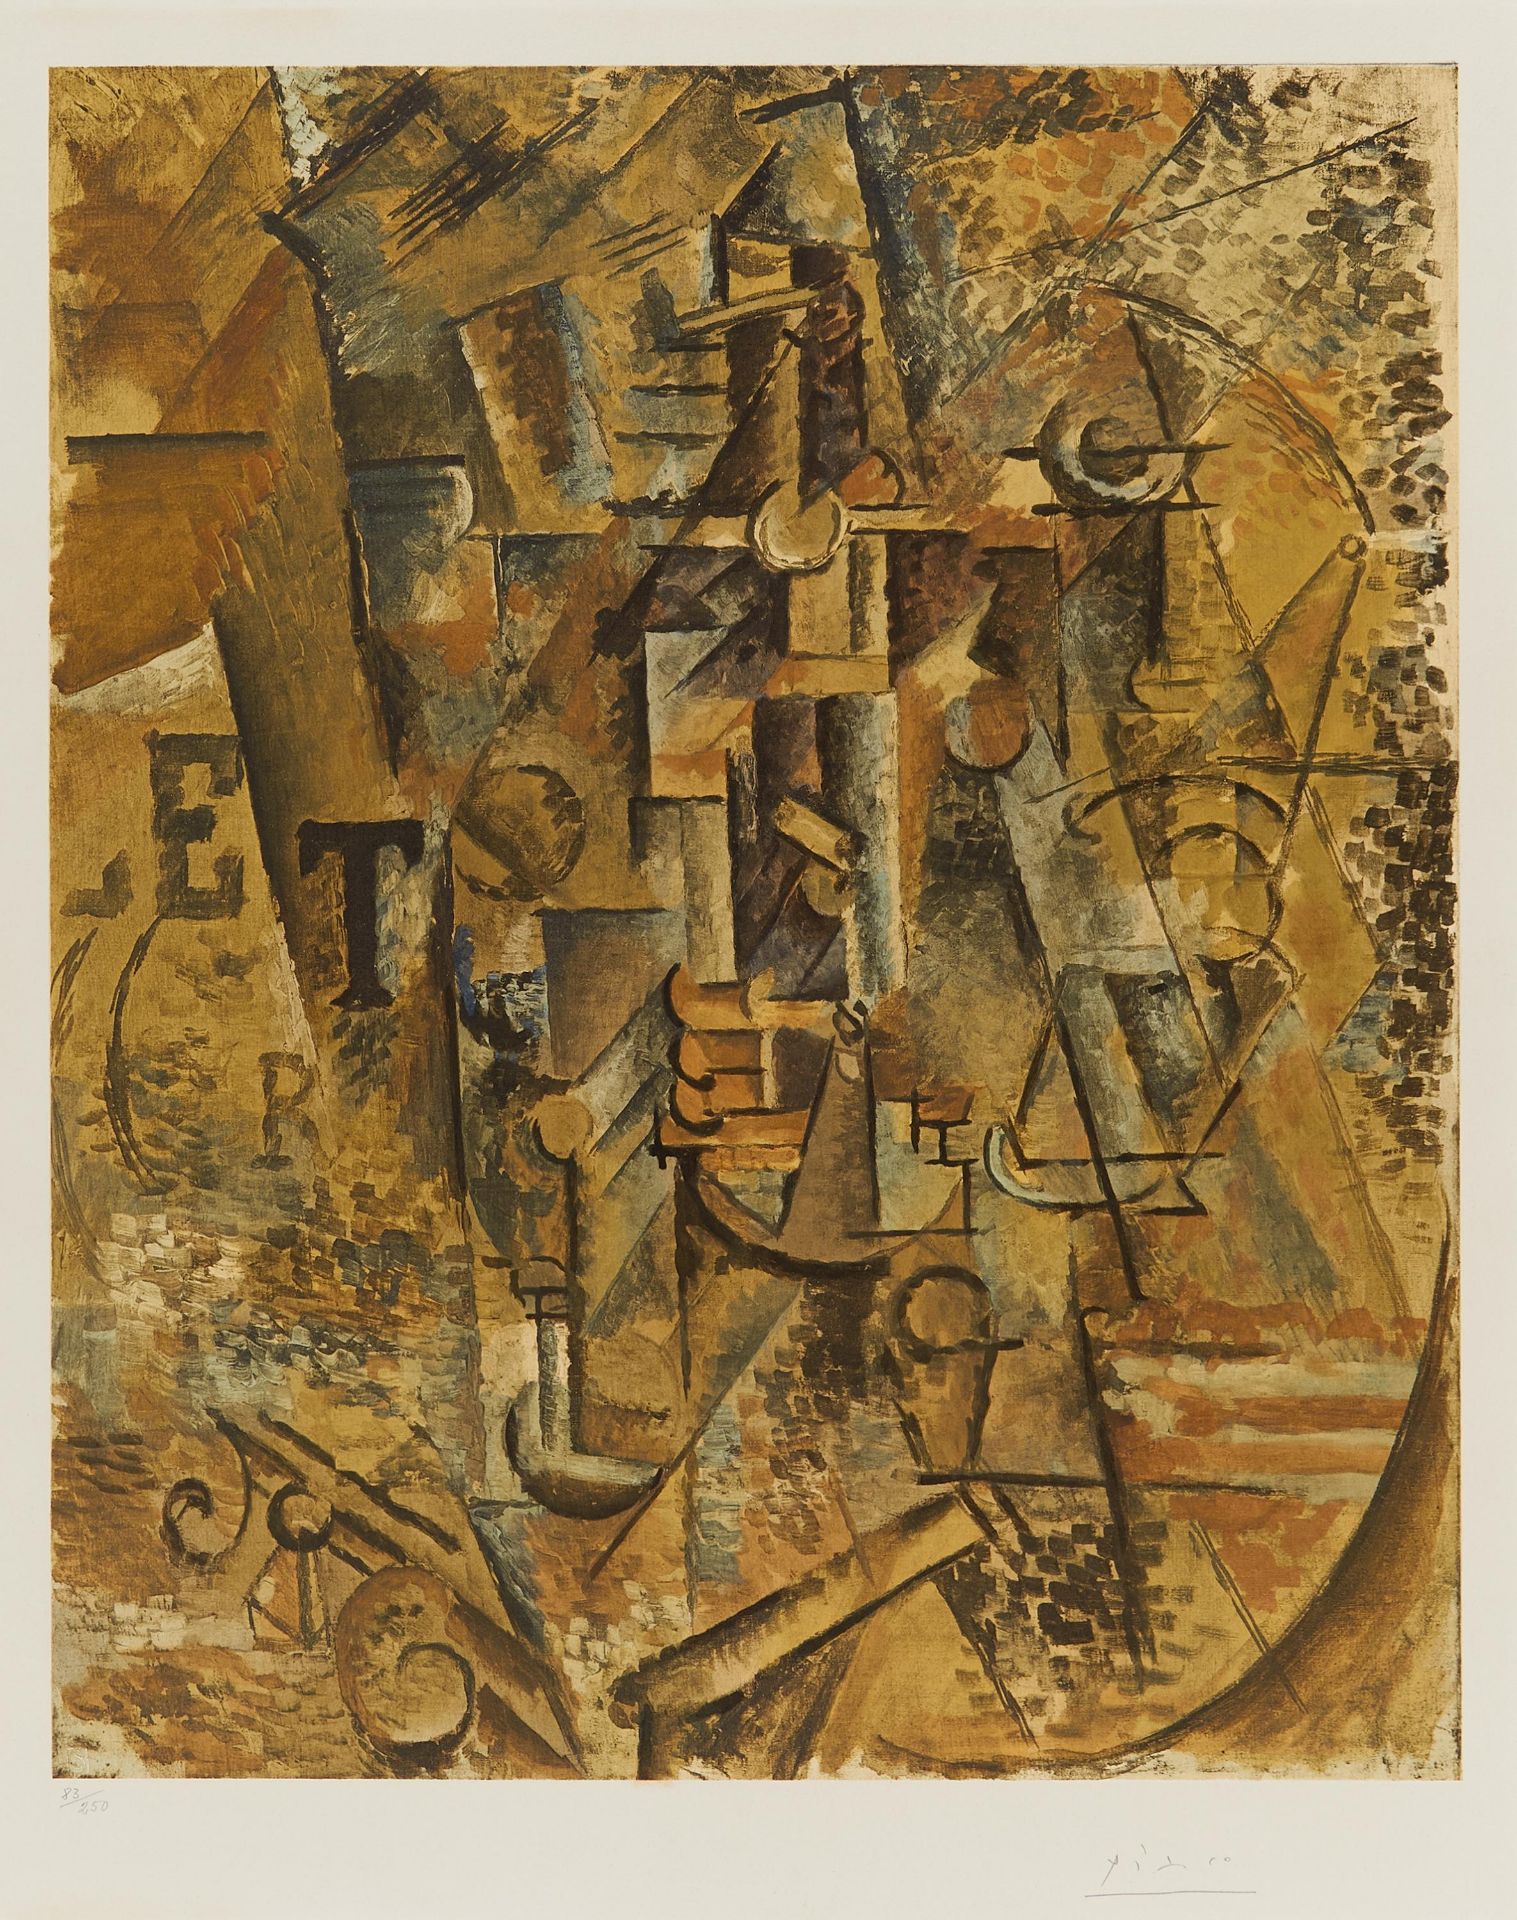 Picasso, Pablo 1881 Malaga - 1973 Mougins nach La bouteille de rhum. Ca. 1965. Collotypie auf Arches